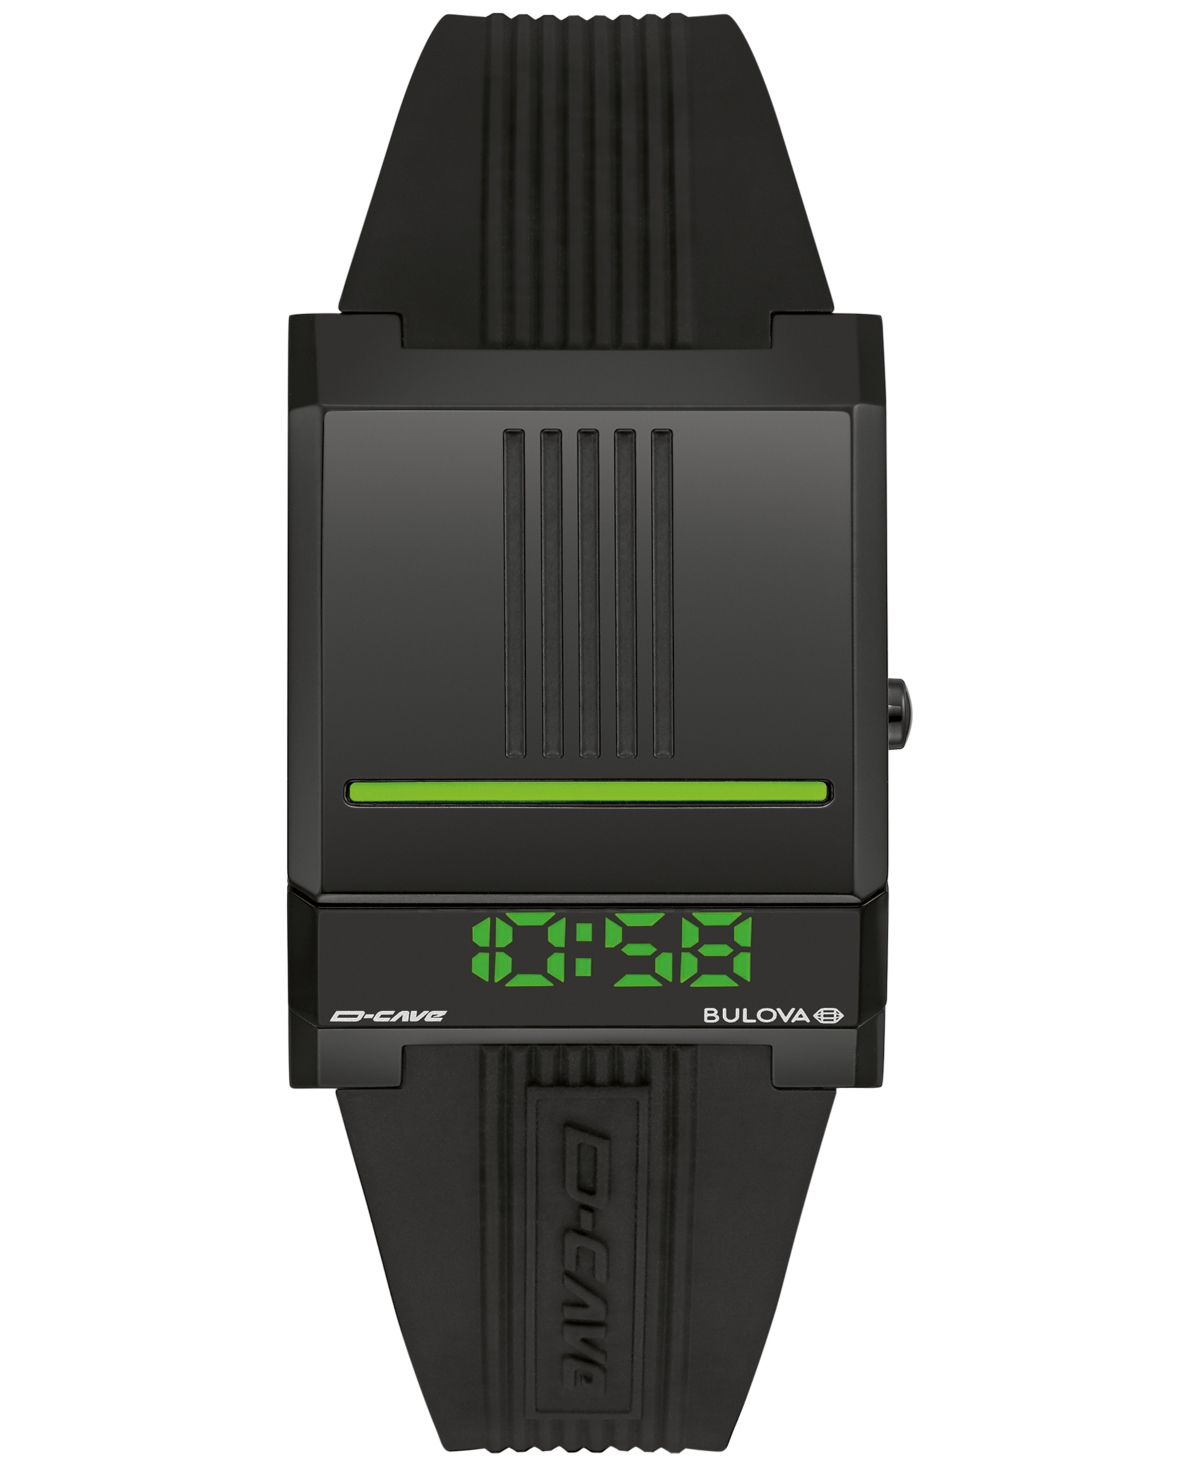 Bulova Men's Computron D-cave Digital Black Silicone Strap Watch 31mm